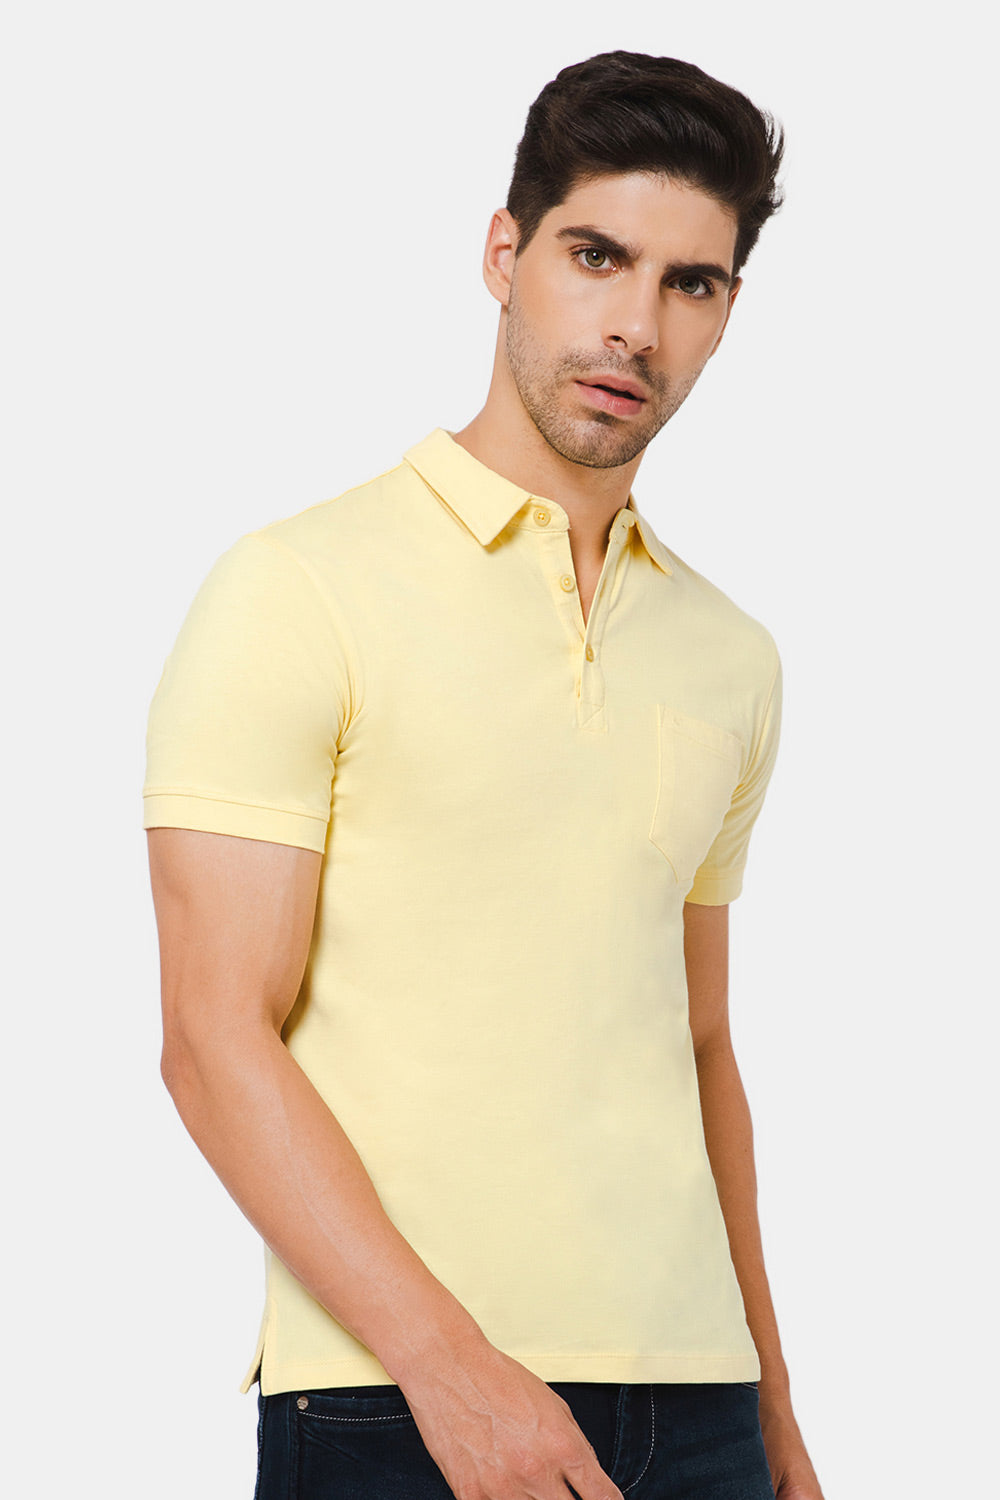 Naidu Hall Enhance Polo Tshirt Cotton - Yellow - S420